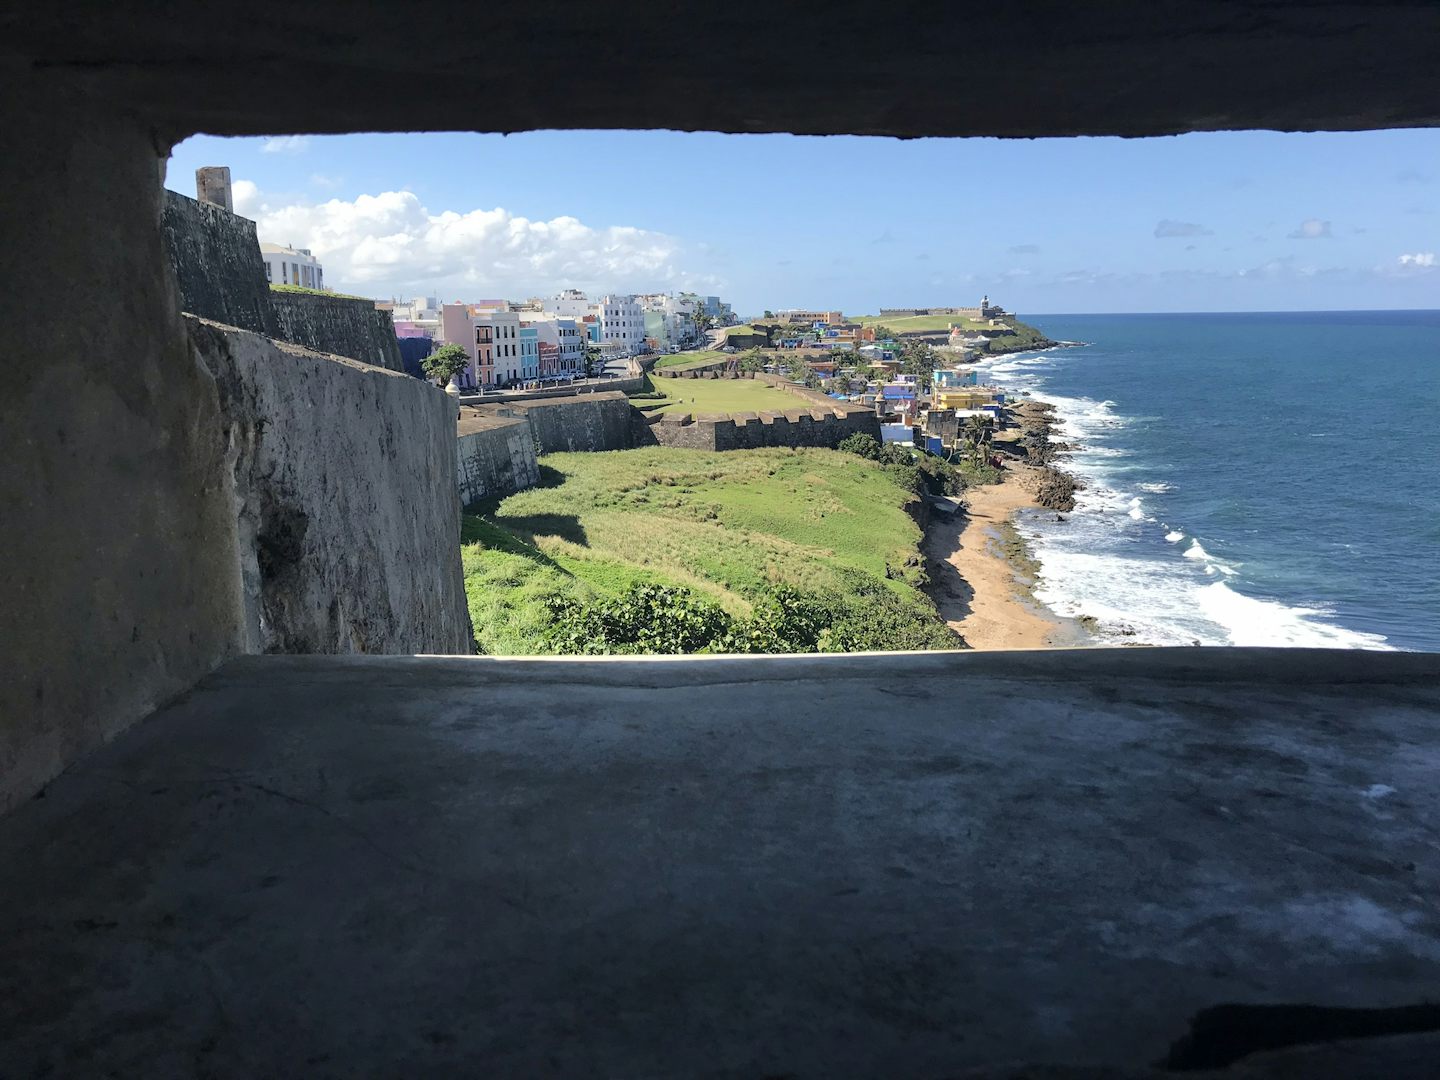 Coastline of San Juan, Puerto Rico, from Castillo de San Cristobal toward S